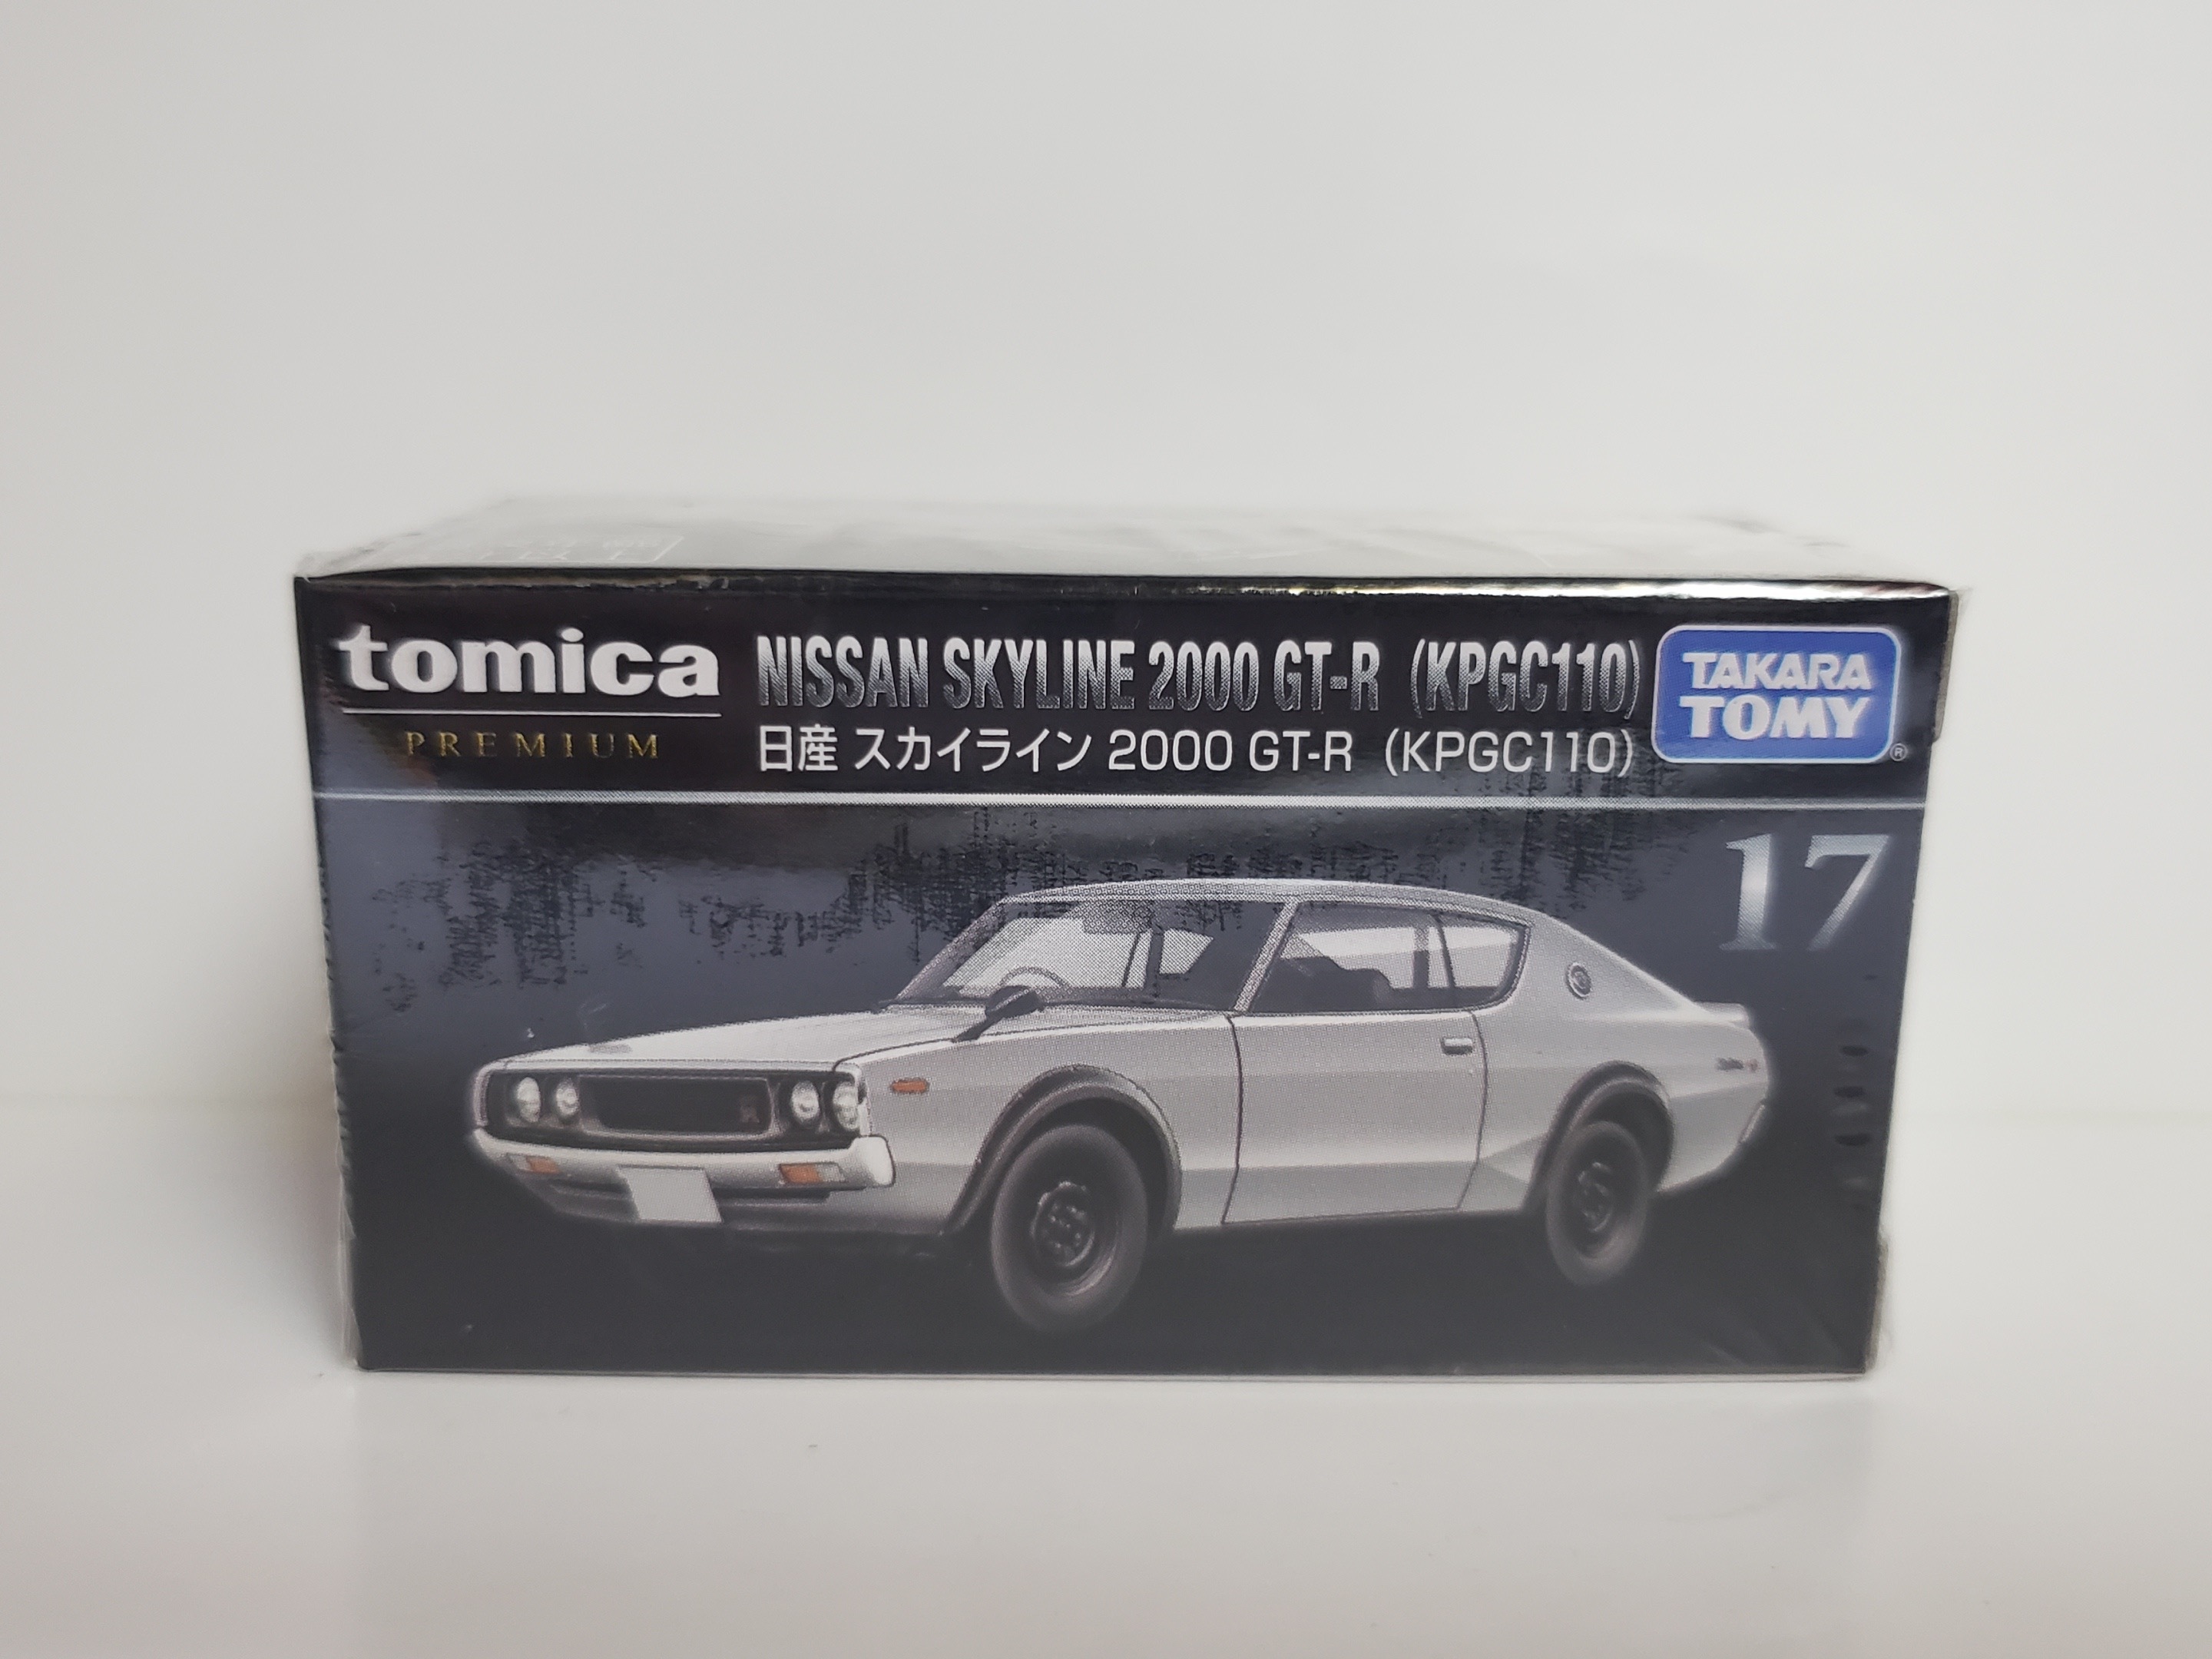 Tomica Premium No. 17 Nissan Skyline 2000 GT-R (KPGC110